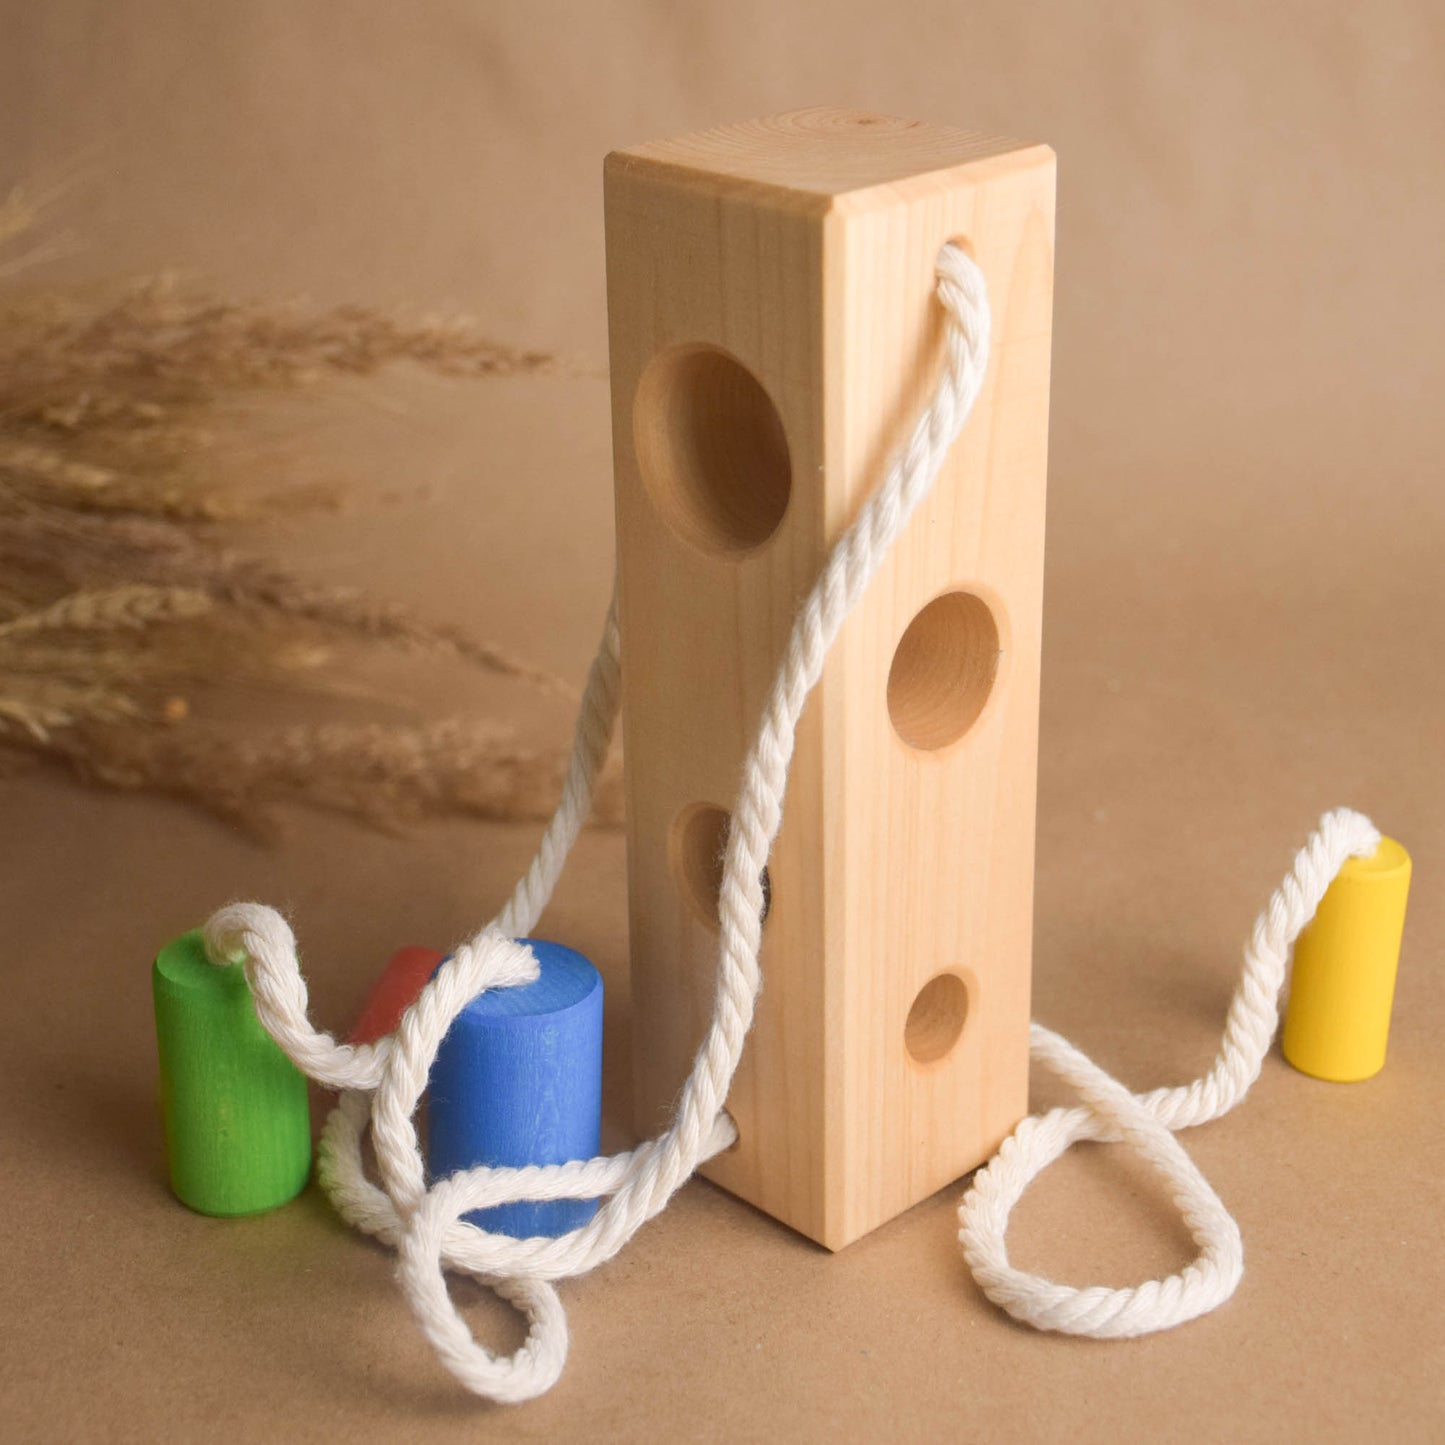 Montessori Color Sorting Activities for Preschoolers Wood Block with Cylinders